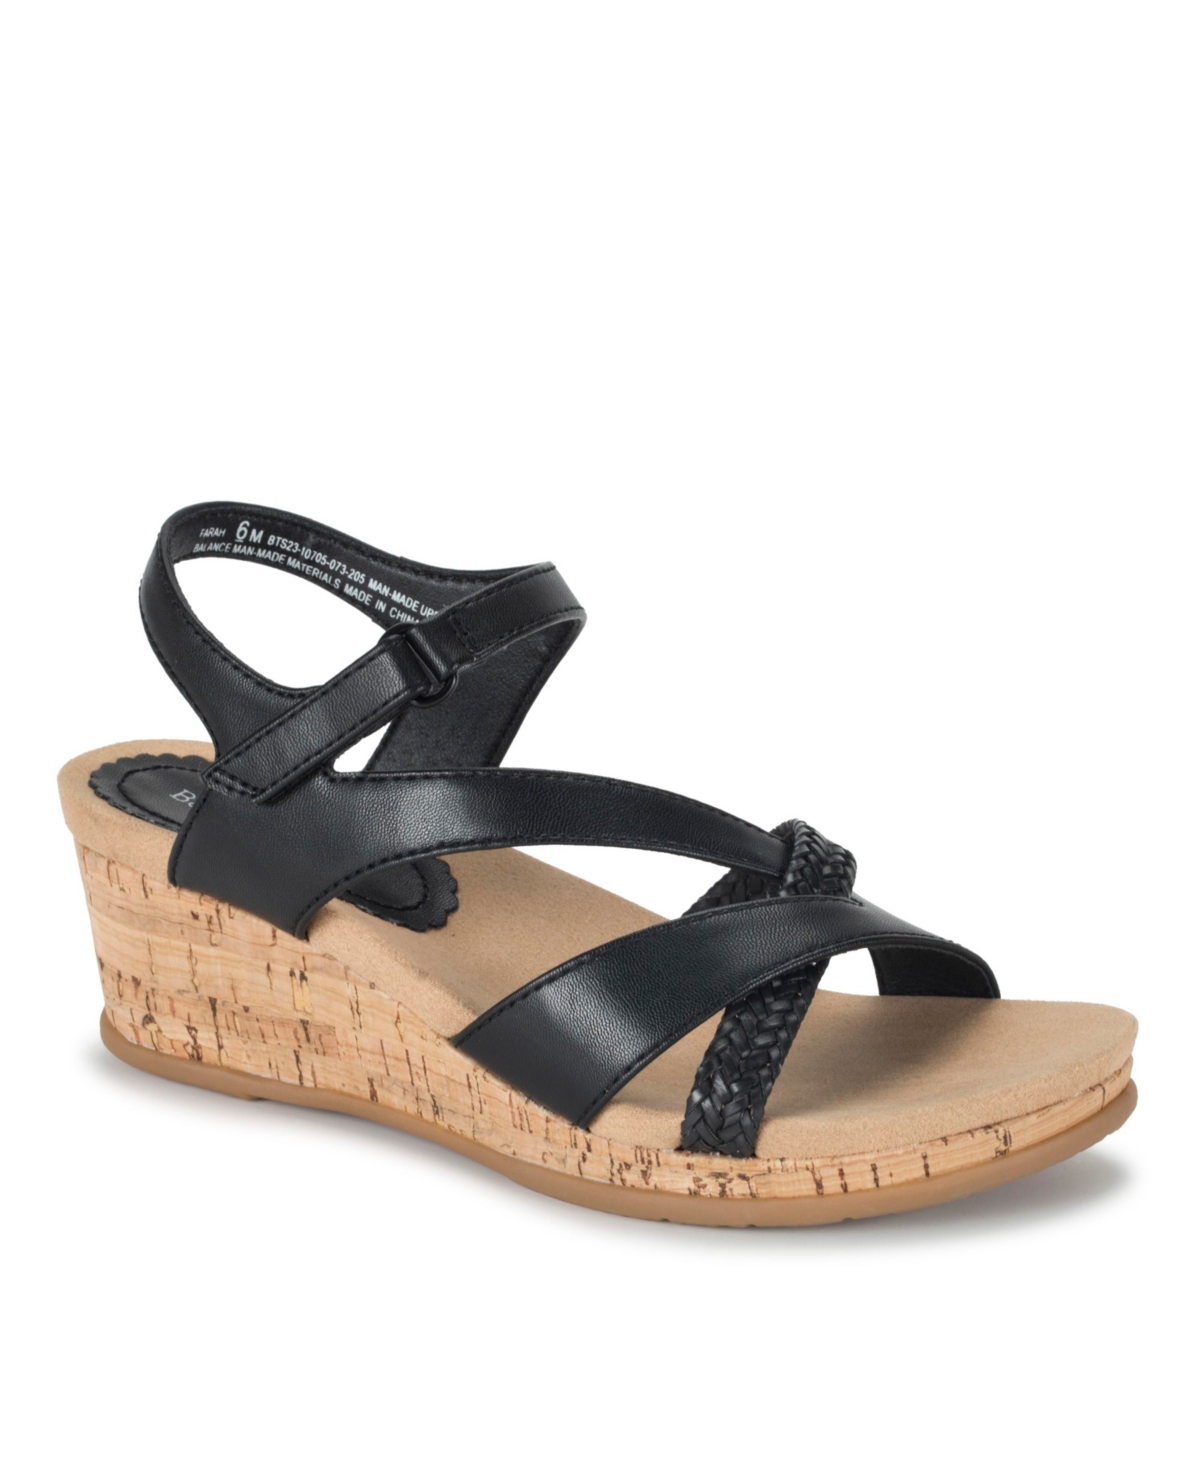 Baretraps Women's Farah Casual Almond Toe Wedge Sandal Women's Shoes